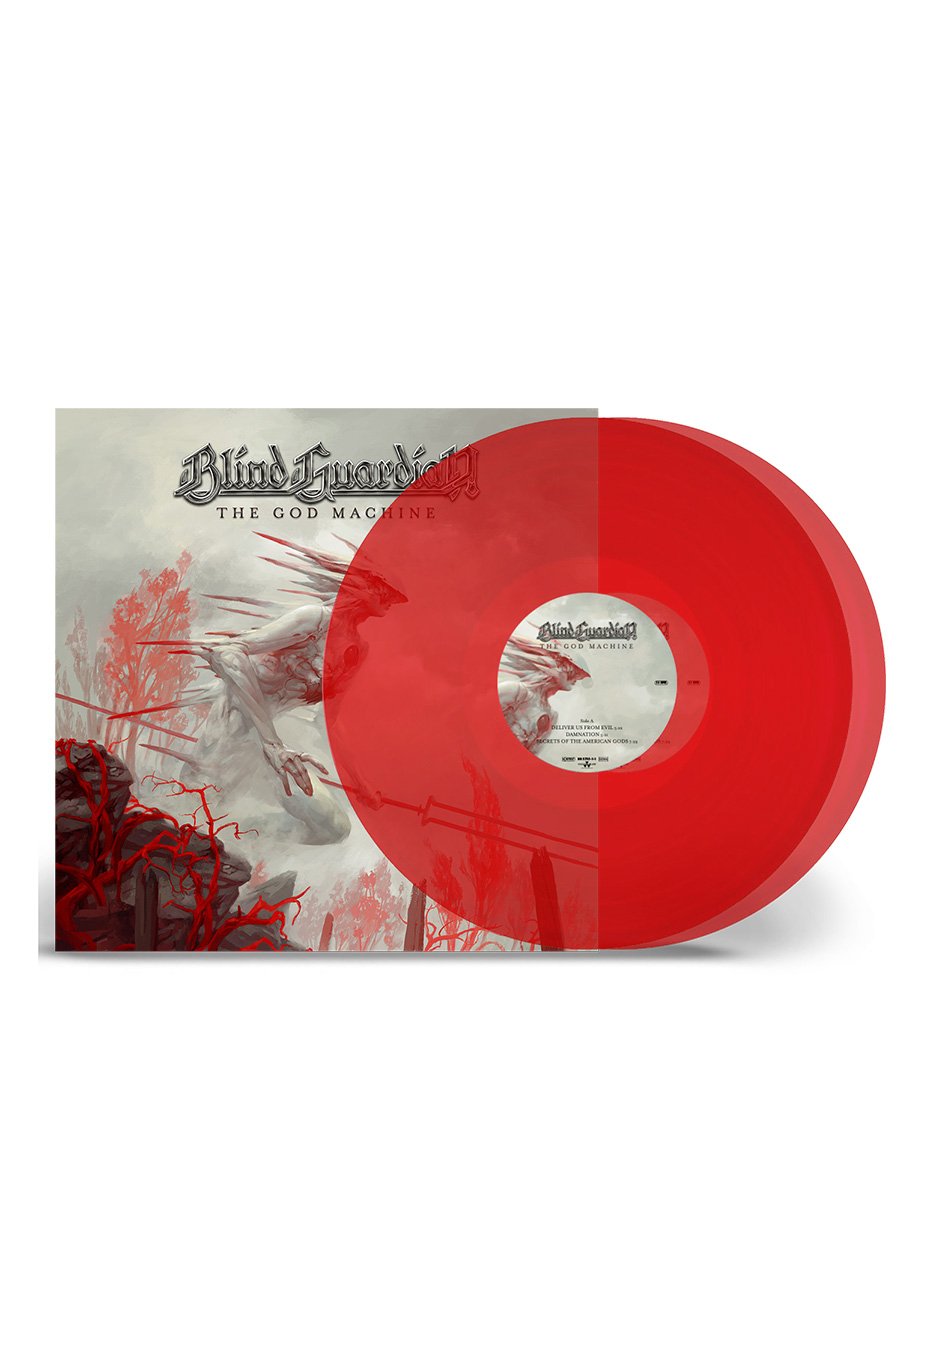 Blind Guardian - The God Machine Ltd. Transparent Red - Colored 2 Vinyl